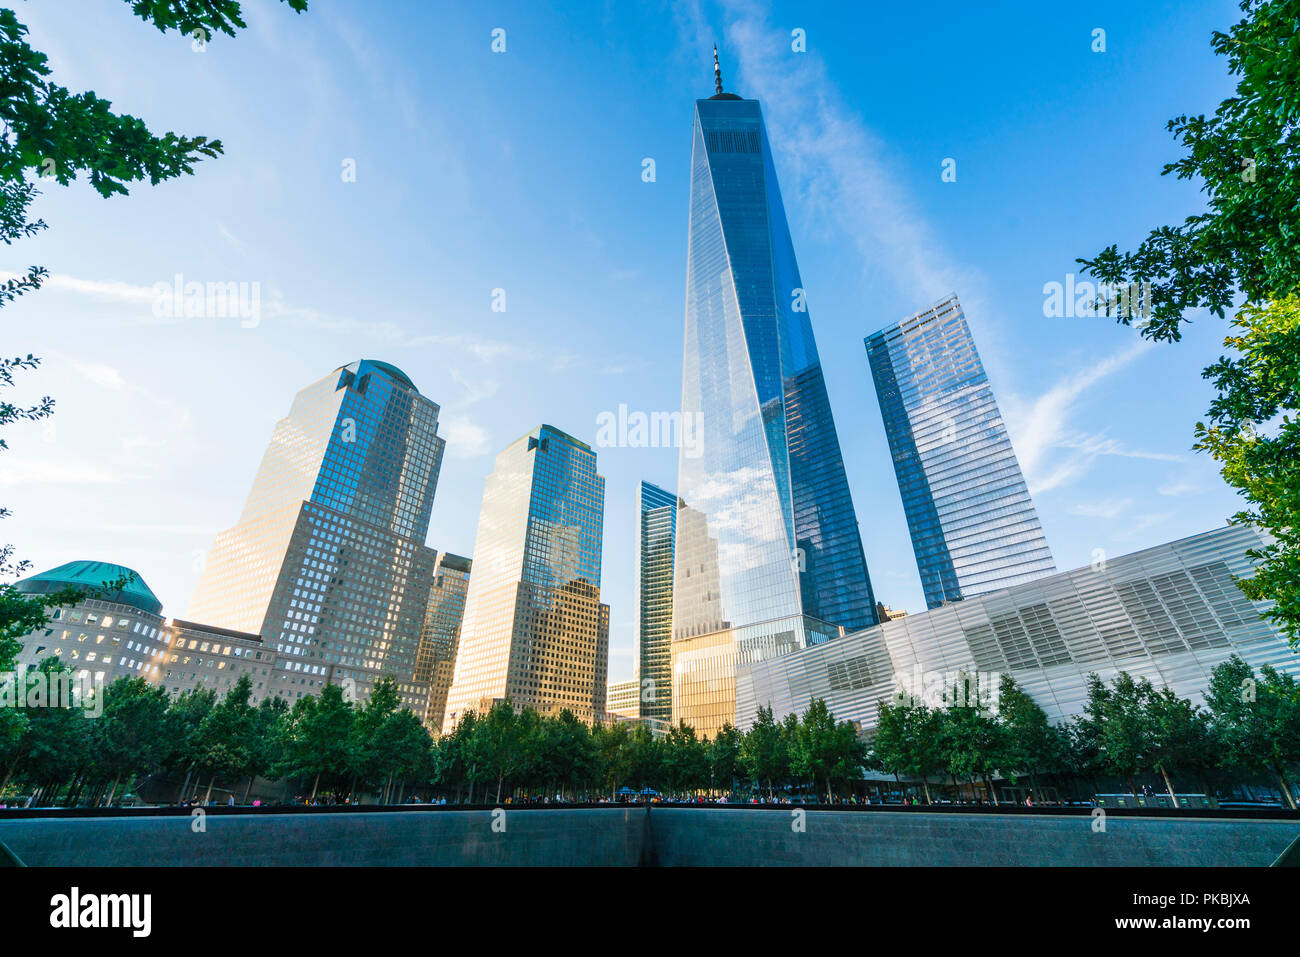 New York, NY, USA, 8-31-17: World Trade Center bei Sonnenuntergang mit Reflexion in Memorial Fountain, New York, USA. Stockfoto